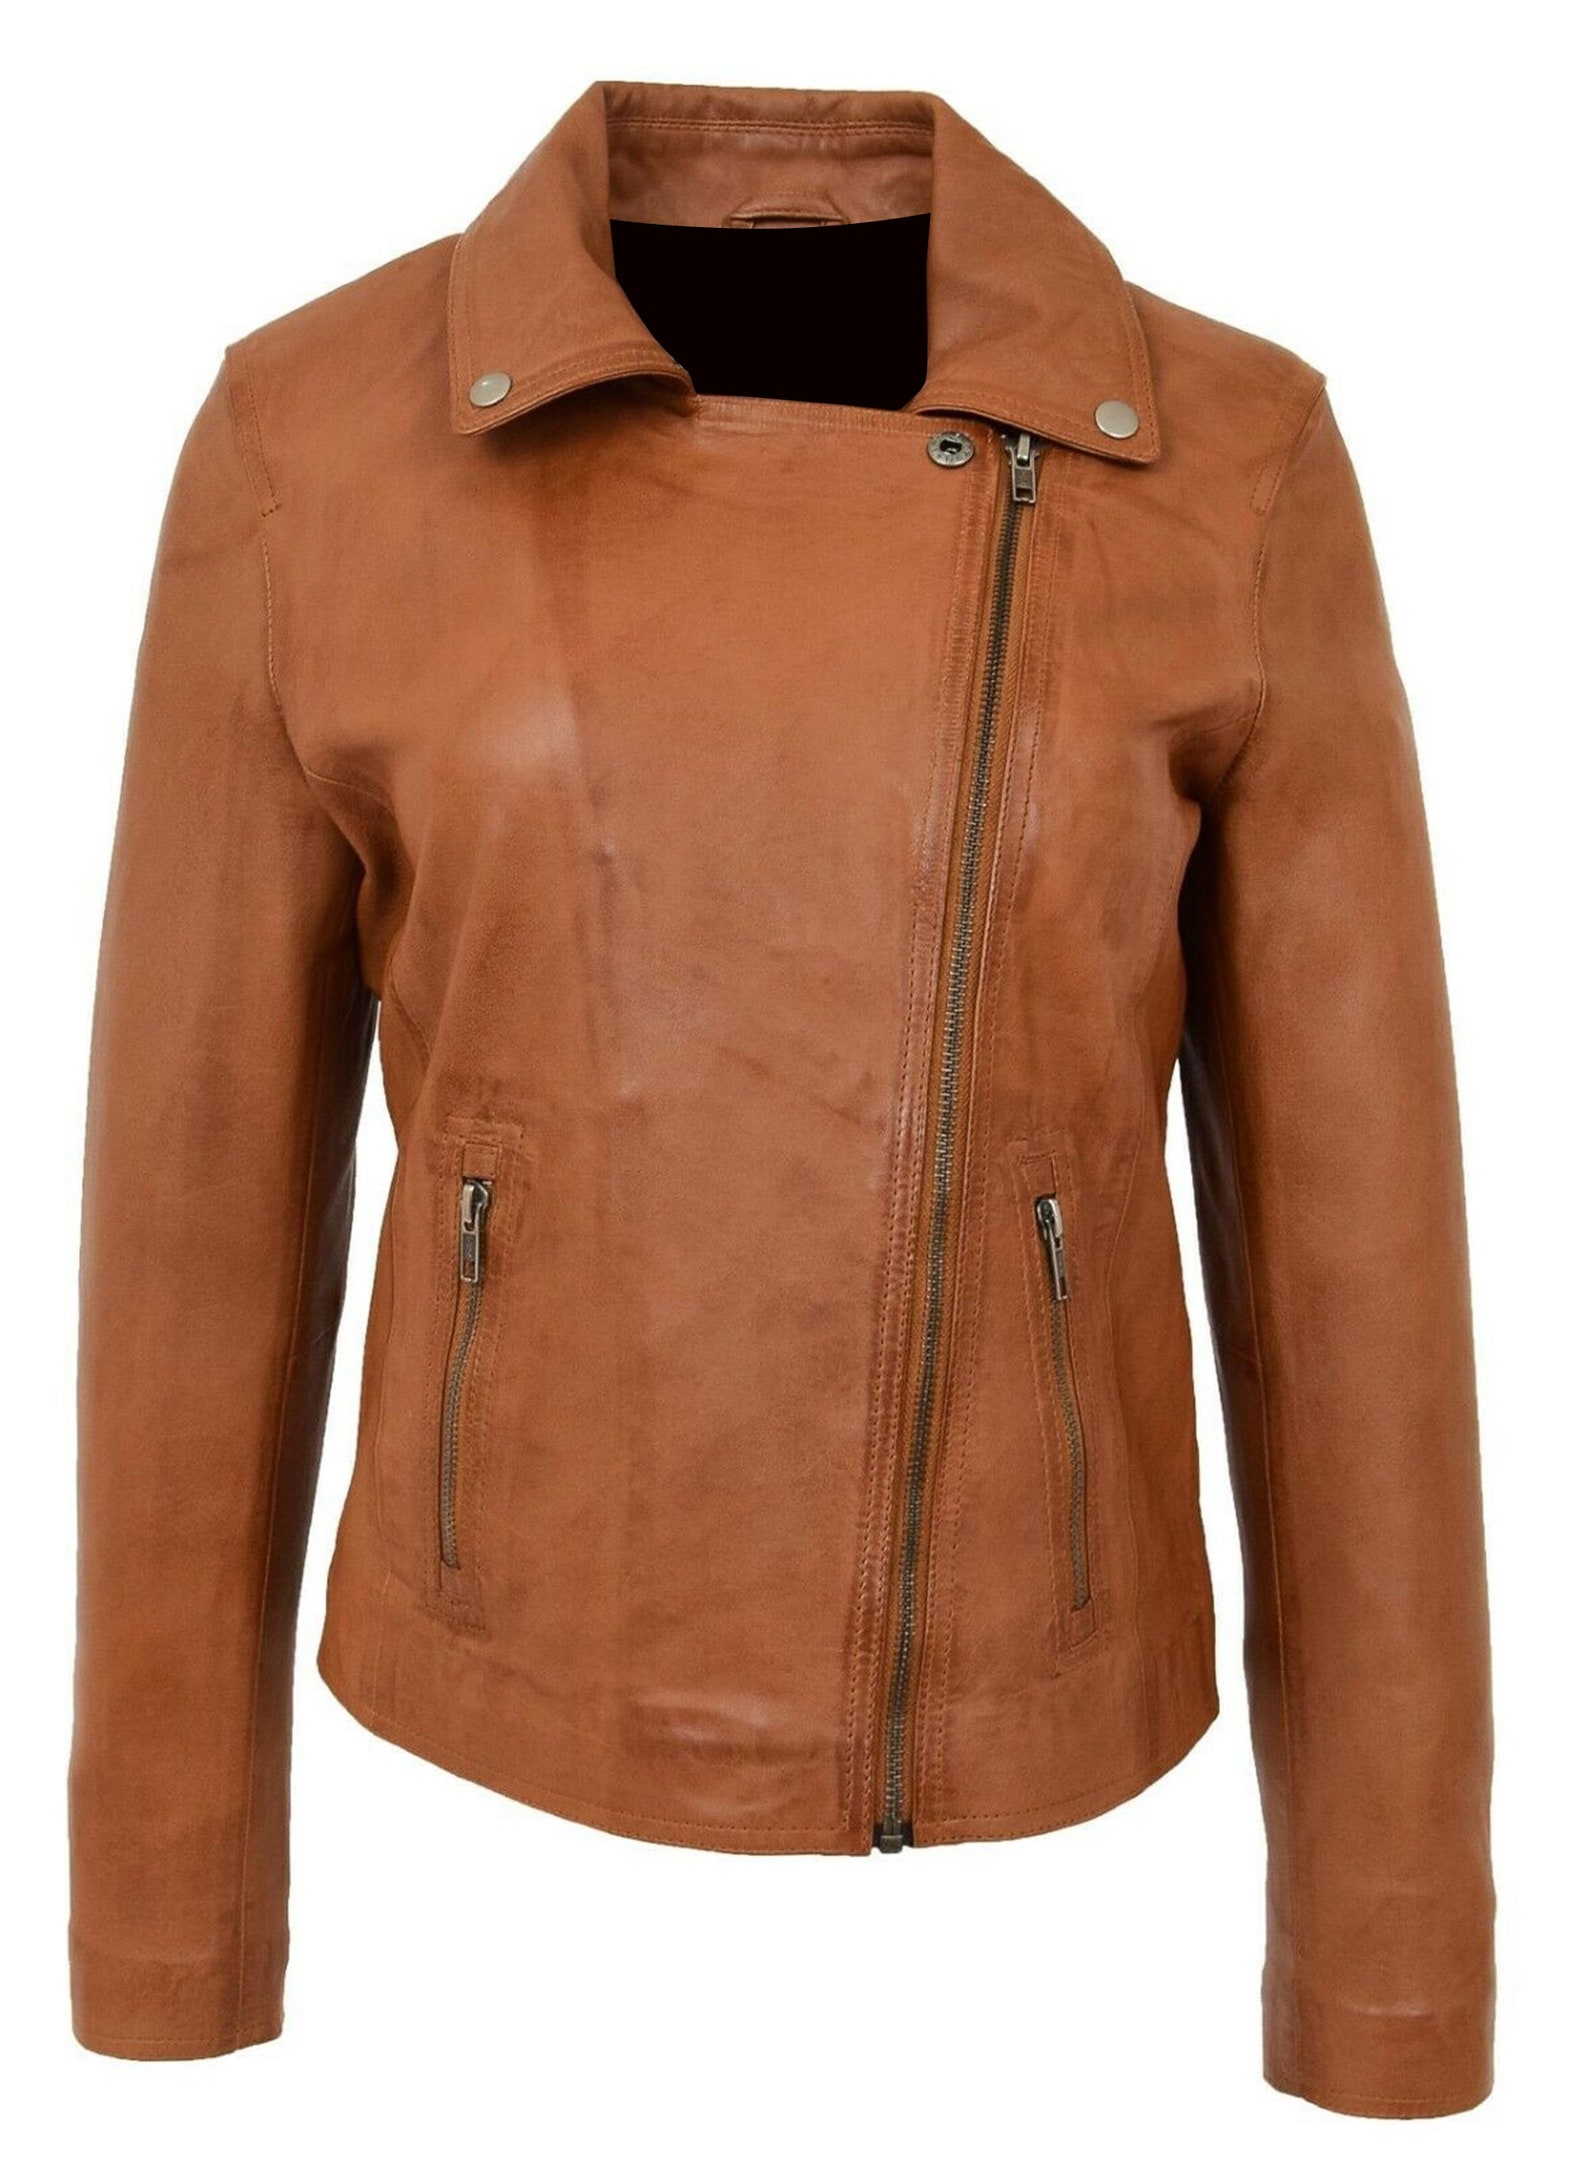 Tan Jacket Leather Womens Jacket Real Leather Jacket Biker | Etsy